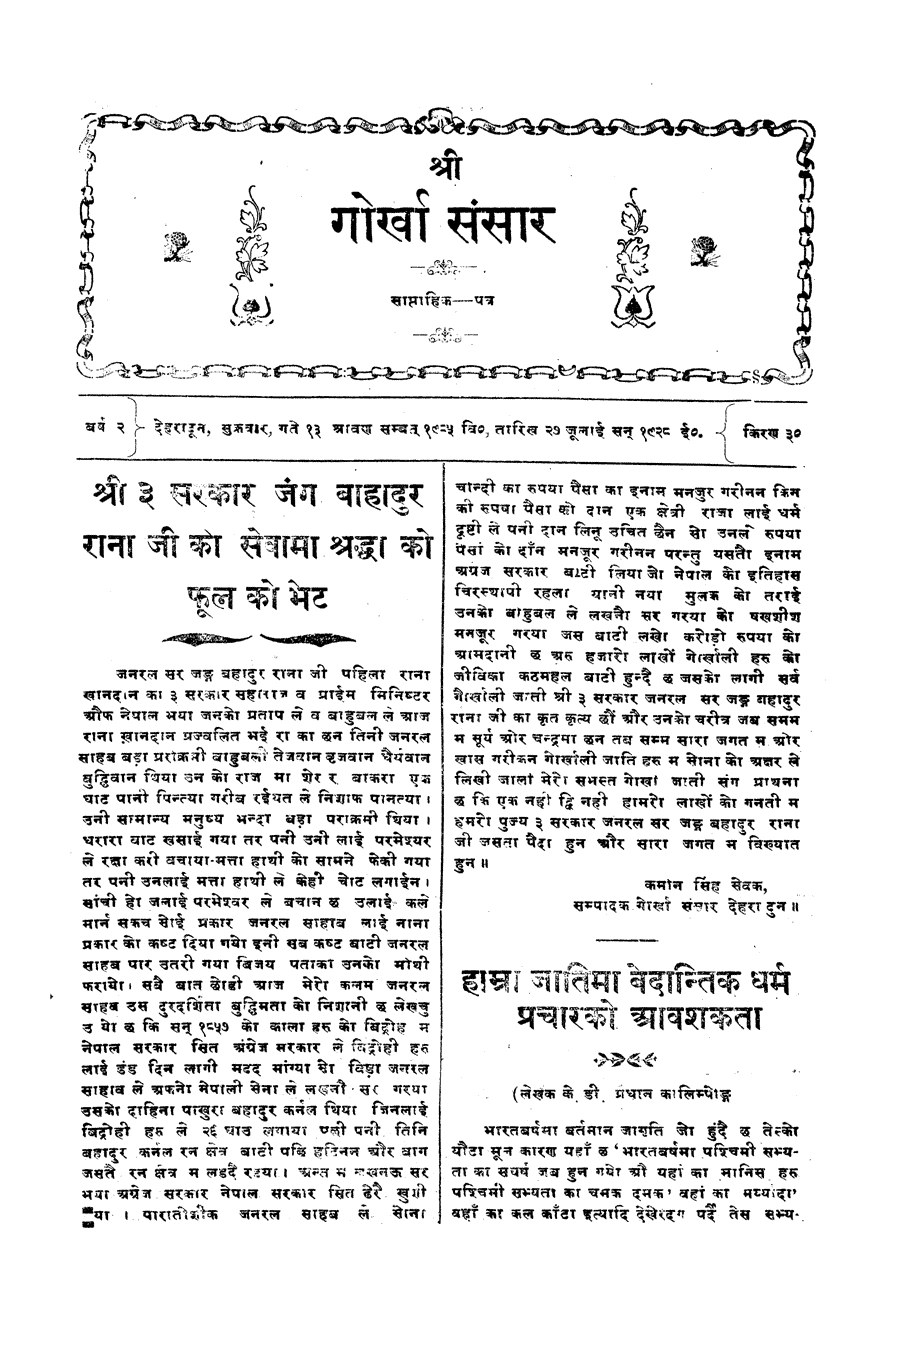 Gorkha Sansar, 27 July 1928, page 5